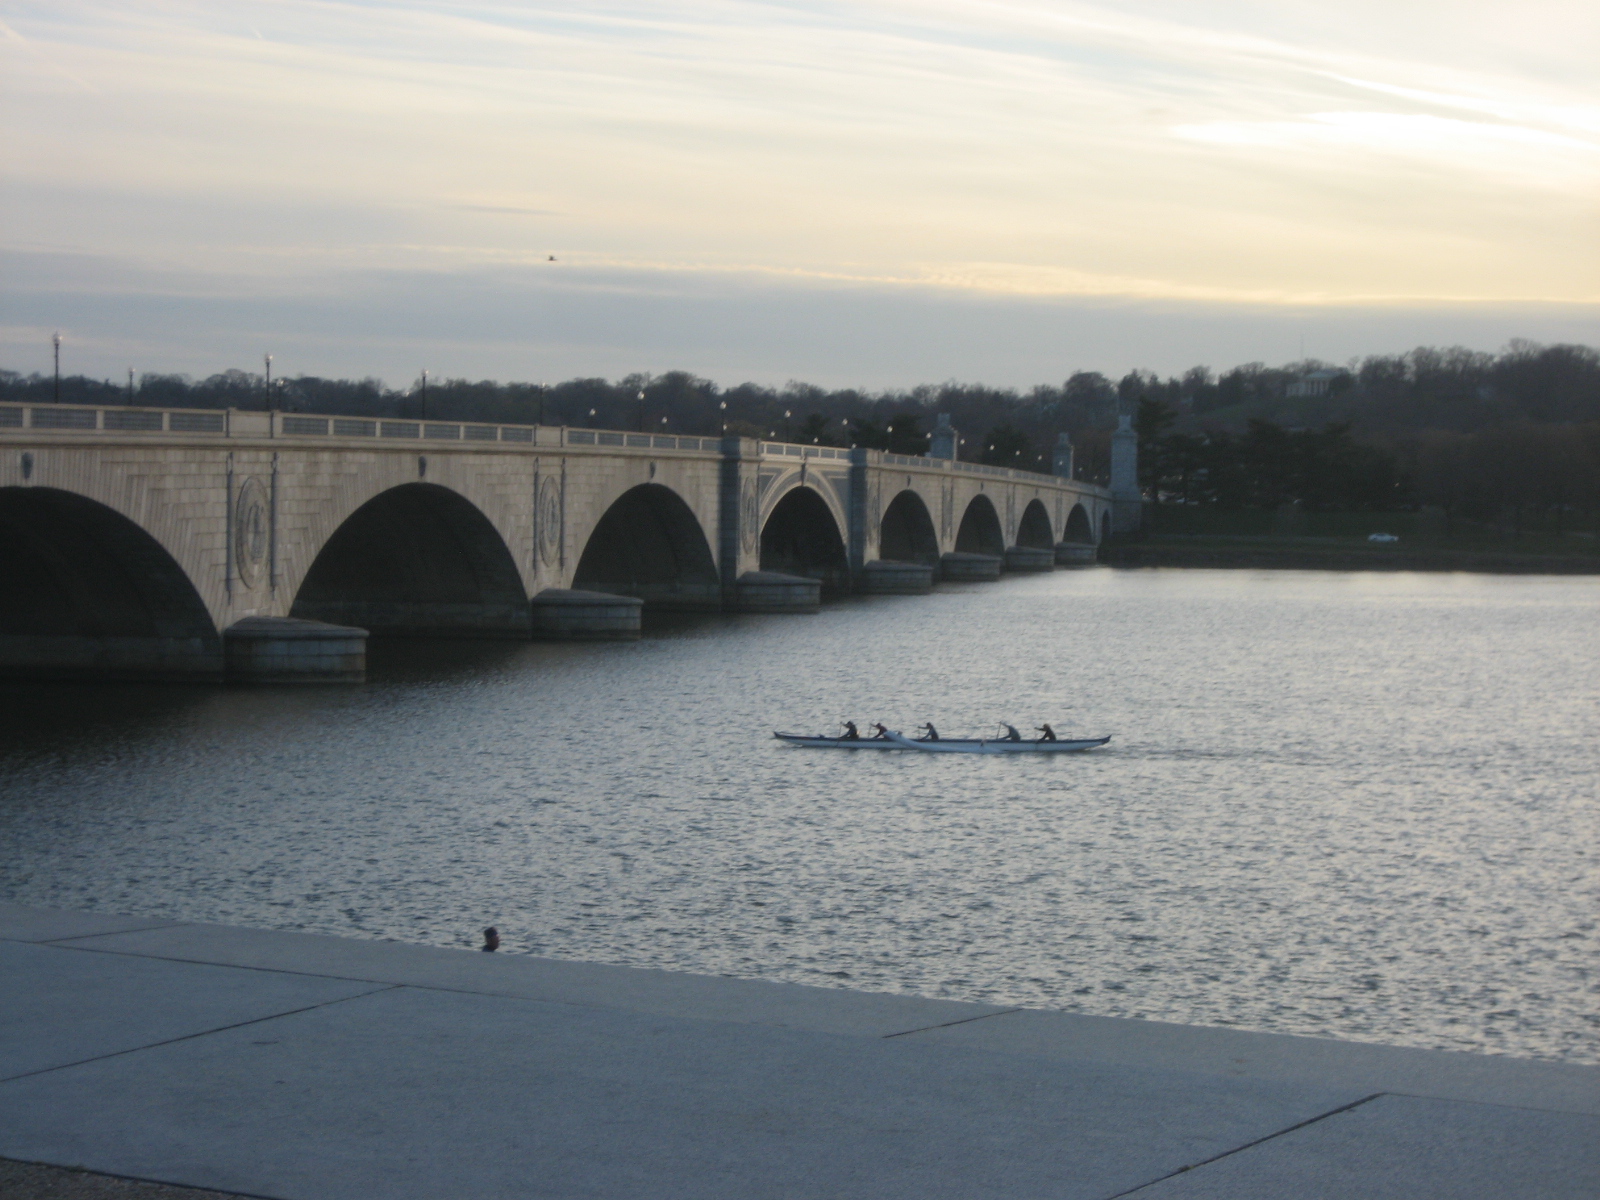 Rowers in the Potomac at sunset along Memorial Bridge